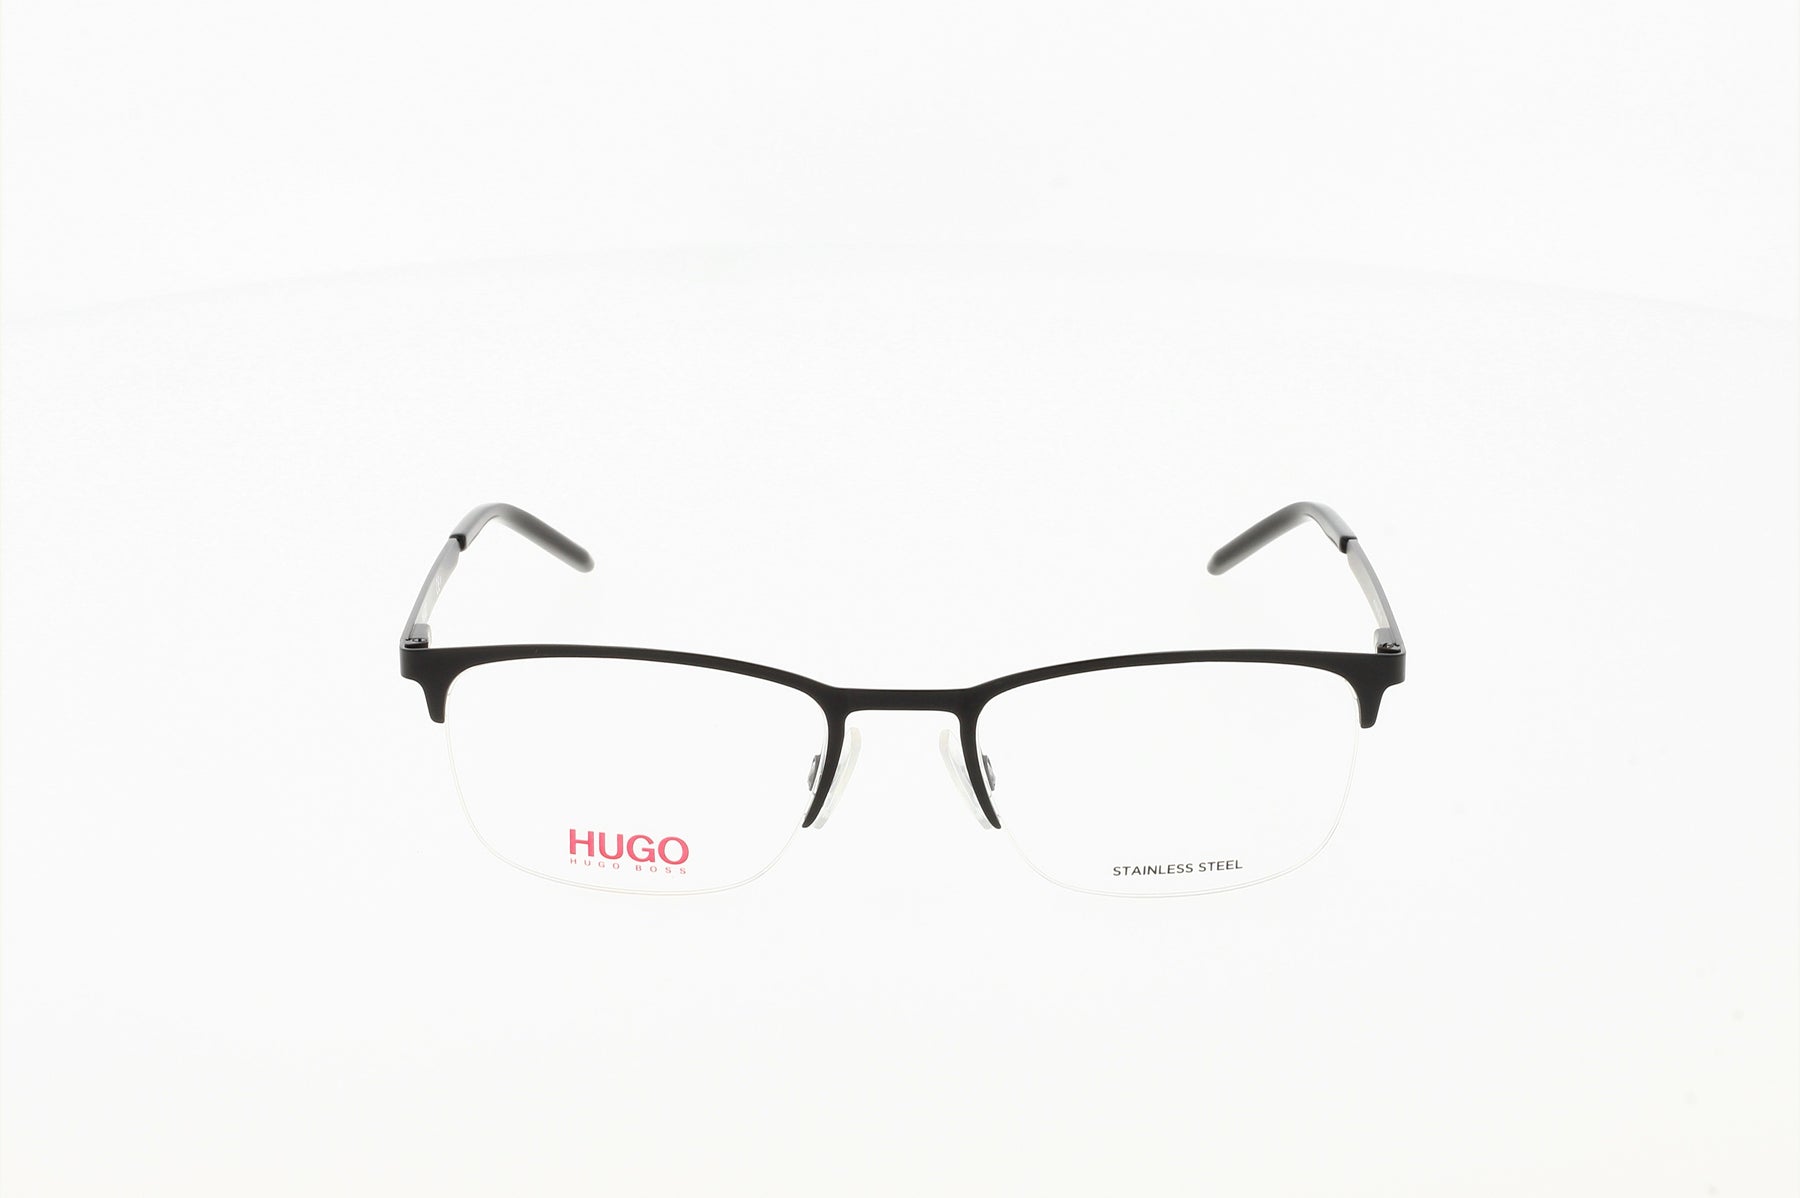 Vista-1 - Gafas oftálmicas Hugo HG 1019 Hombre Color Negro